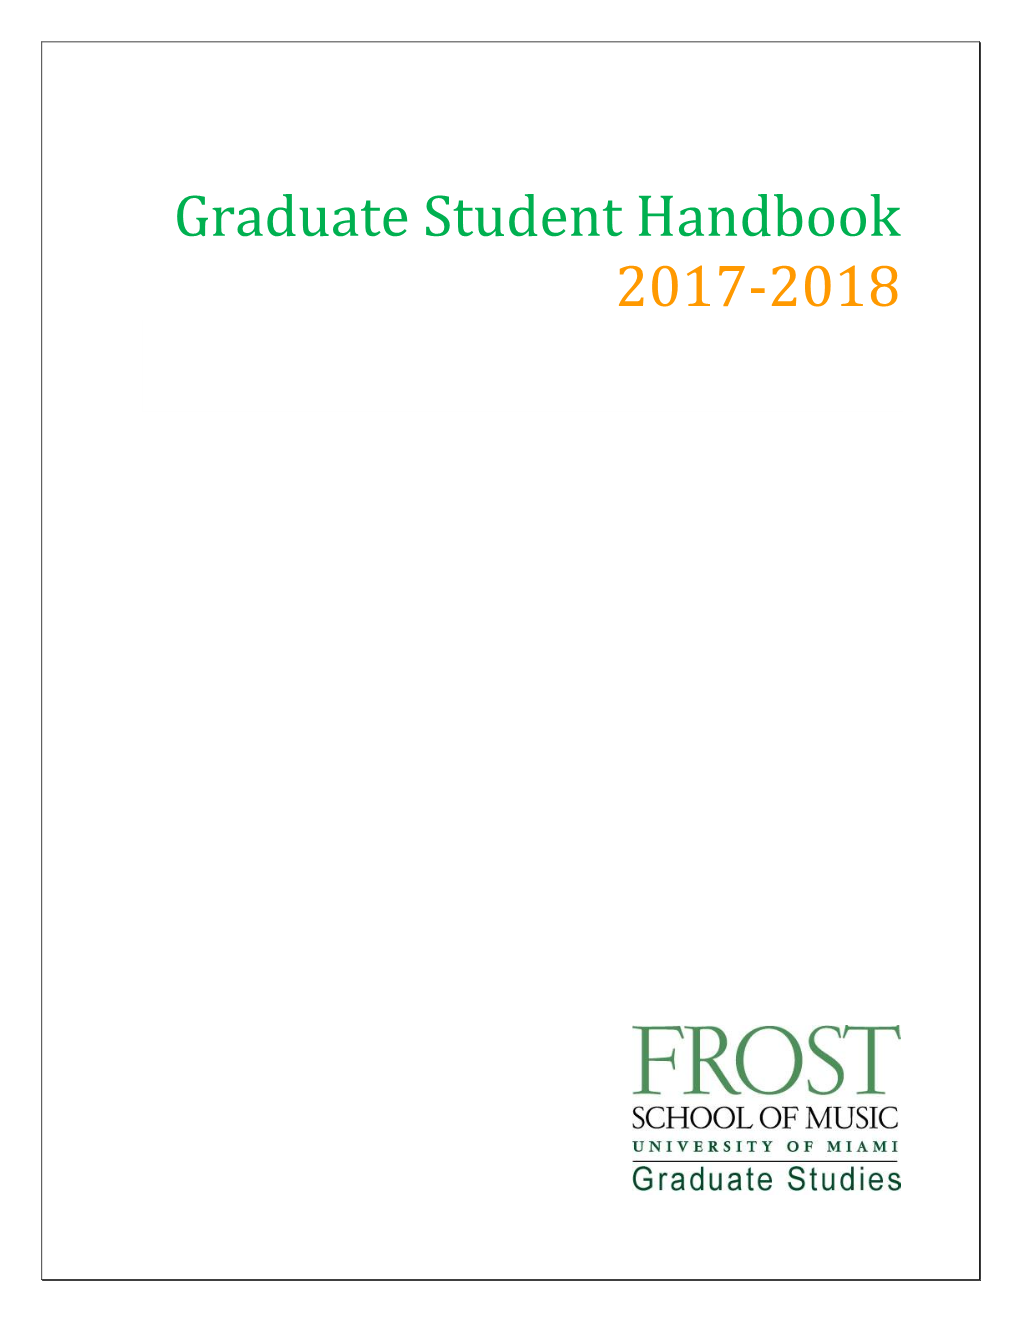 Graduate Studies Handbook